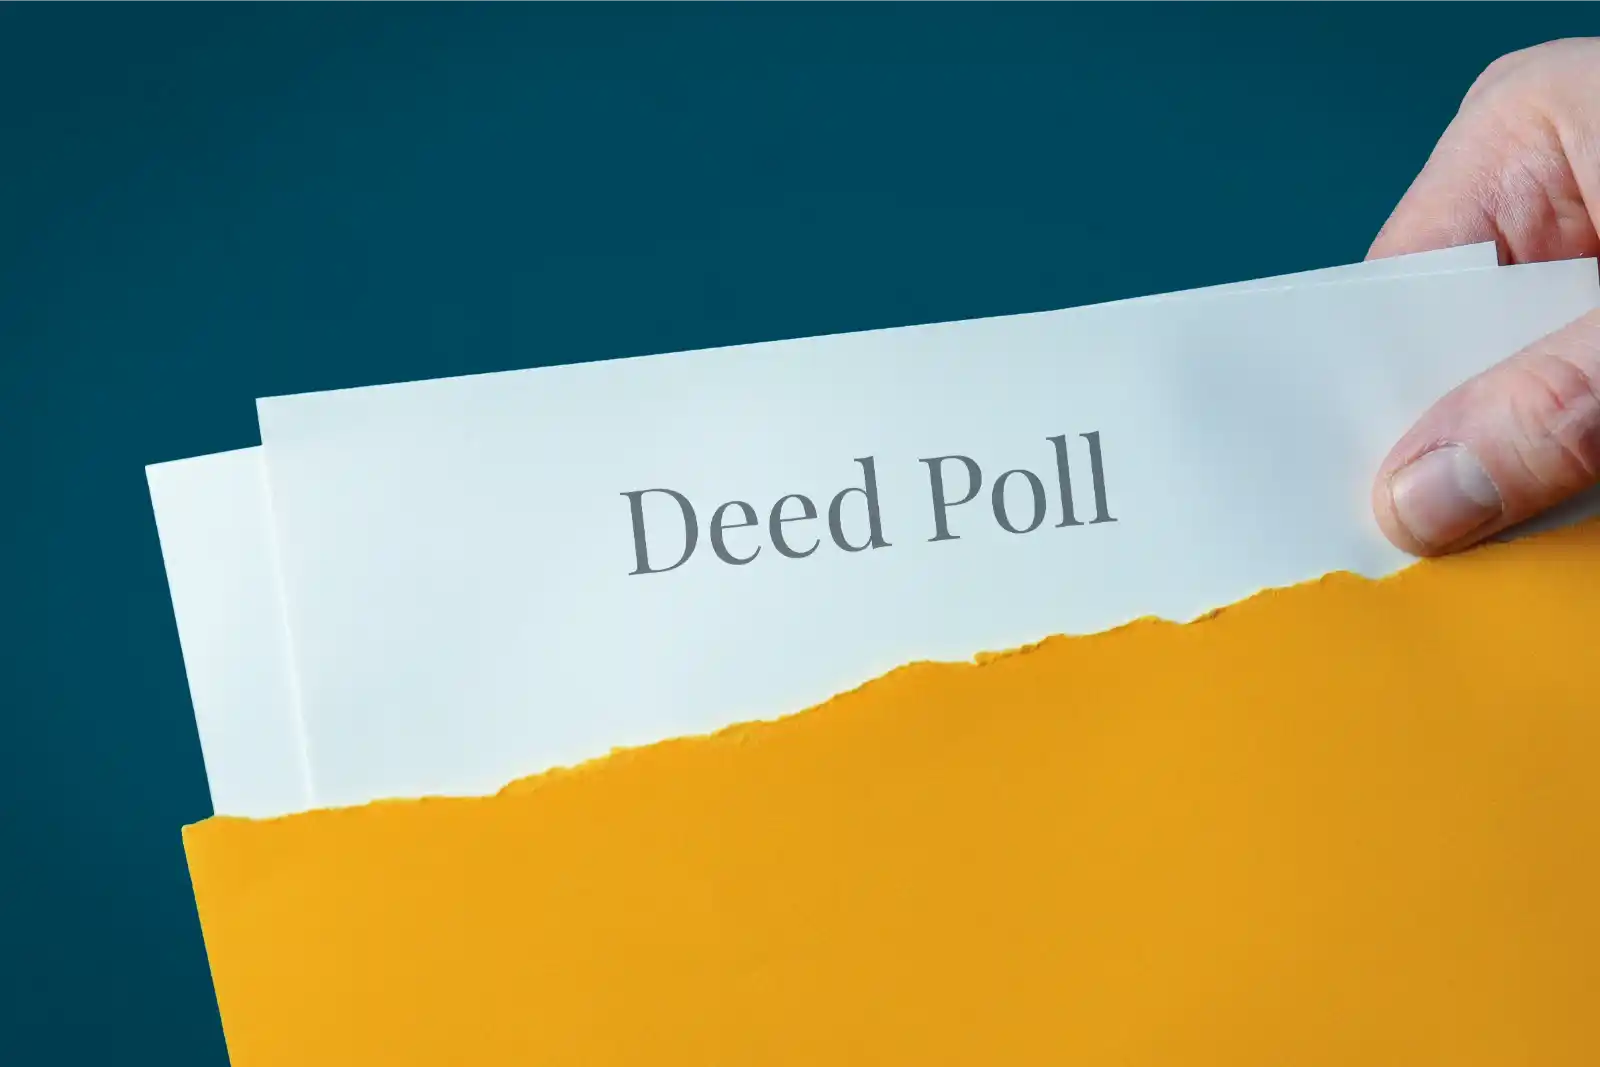 Deed Poll